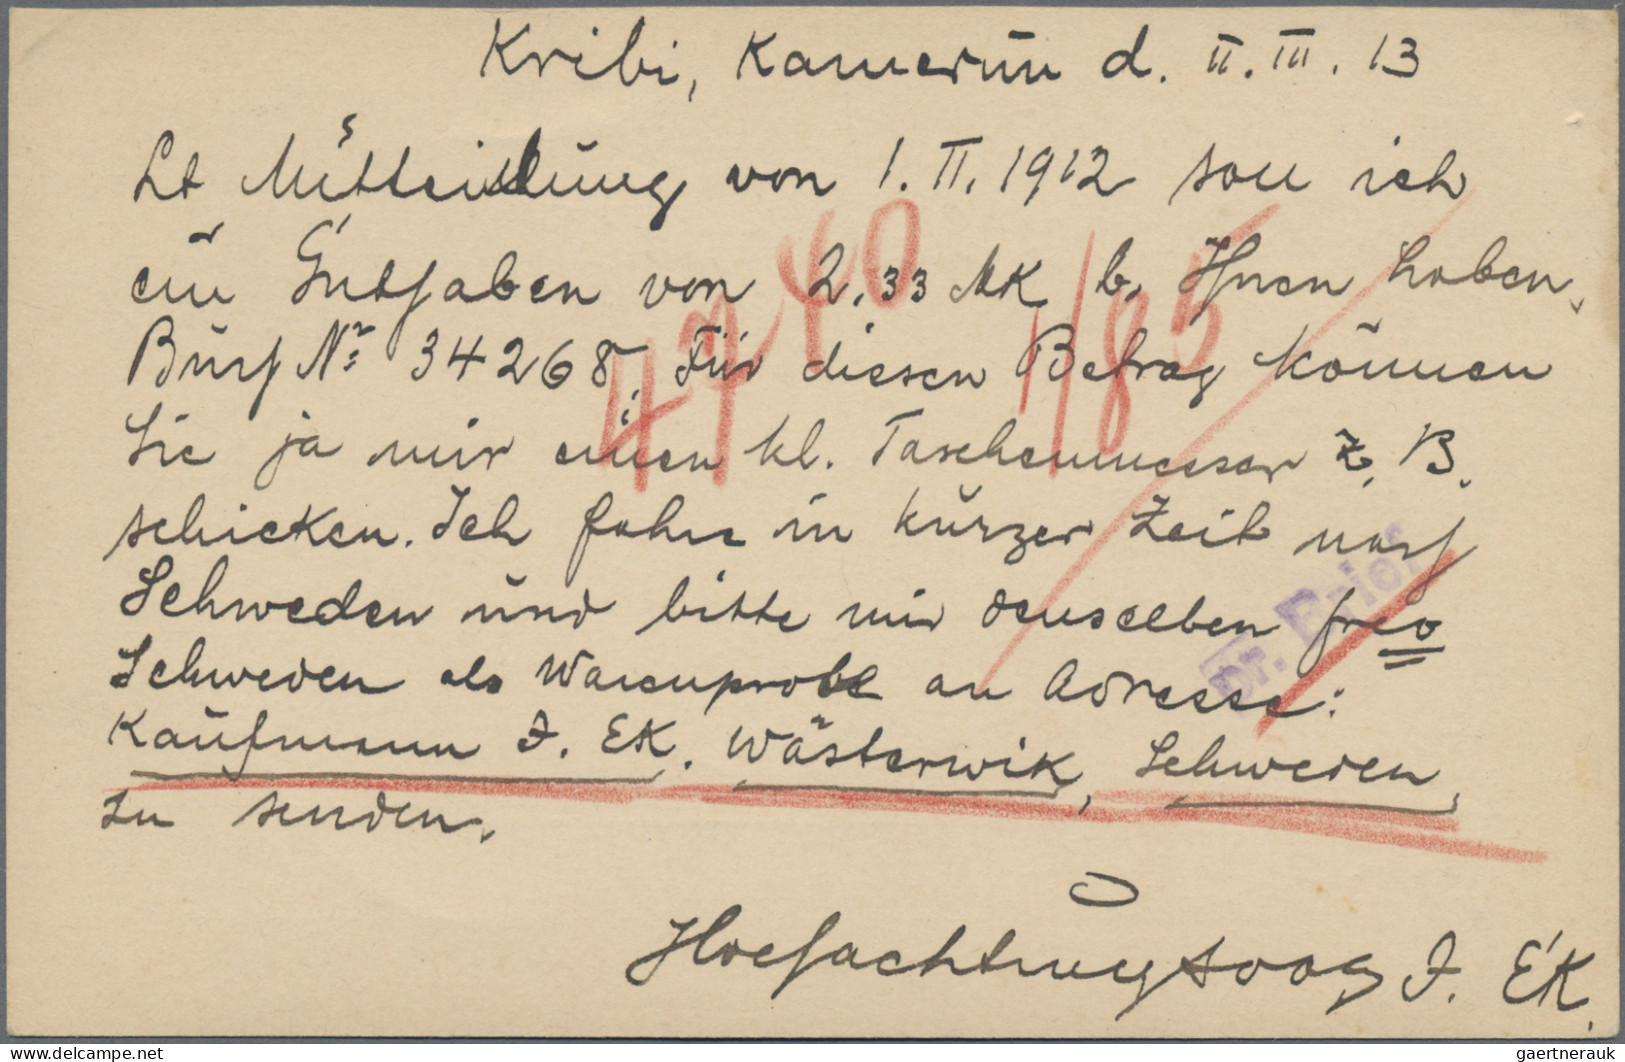 Deutsche Kolonien - Kamerun - Ganzsachen: 1913, 5 Pf. Kaiseryacht Frageteil Als - Cameroun